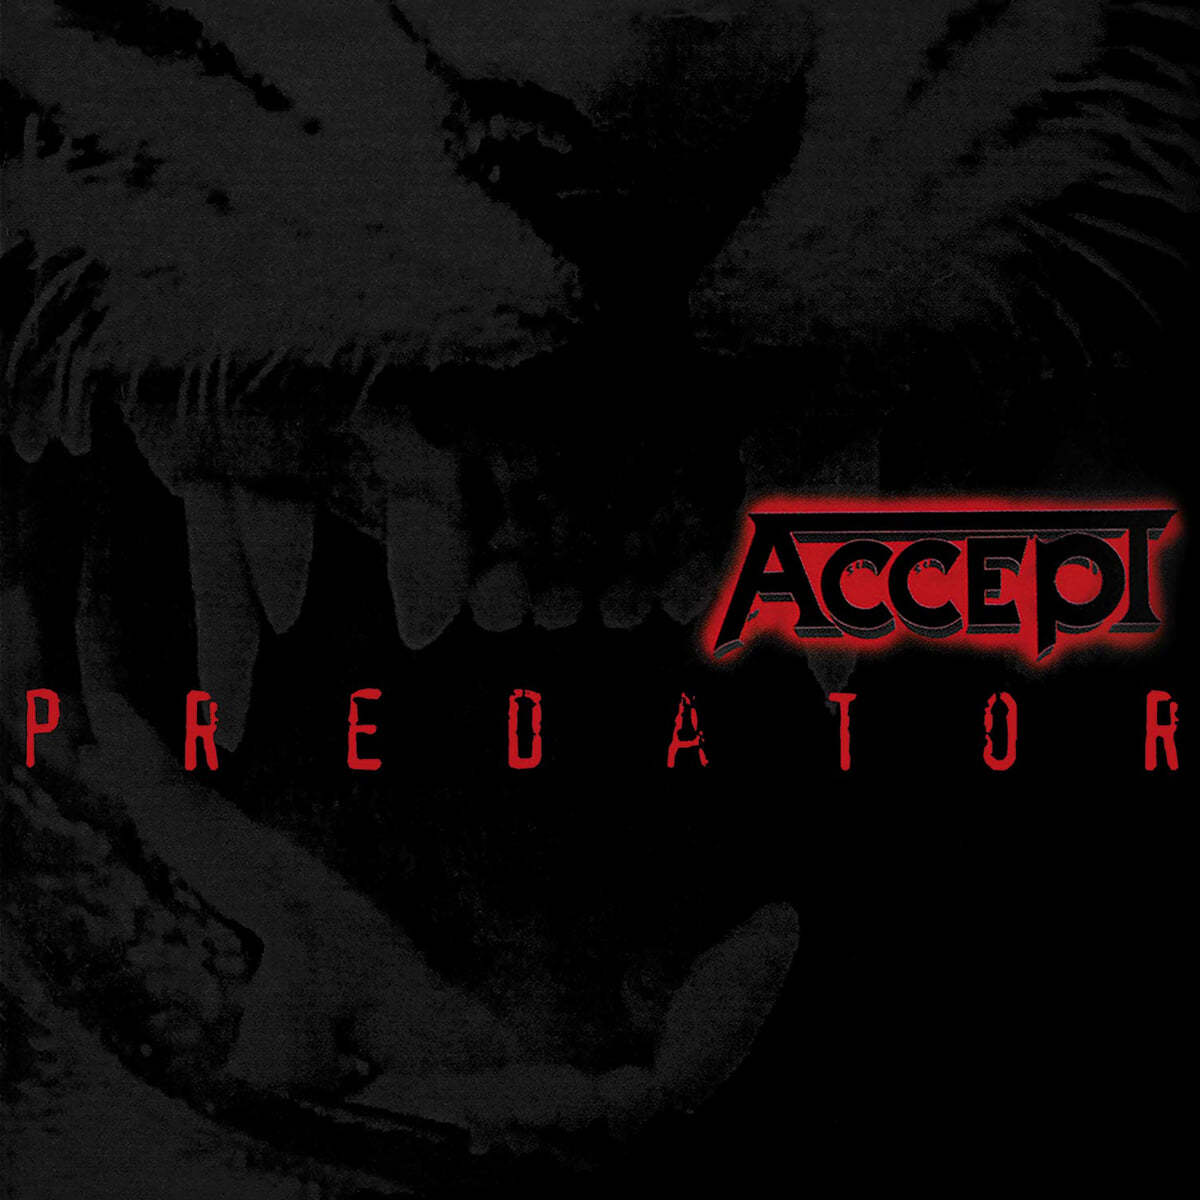 Accept (억셉트) - Predator [LP] 